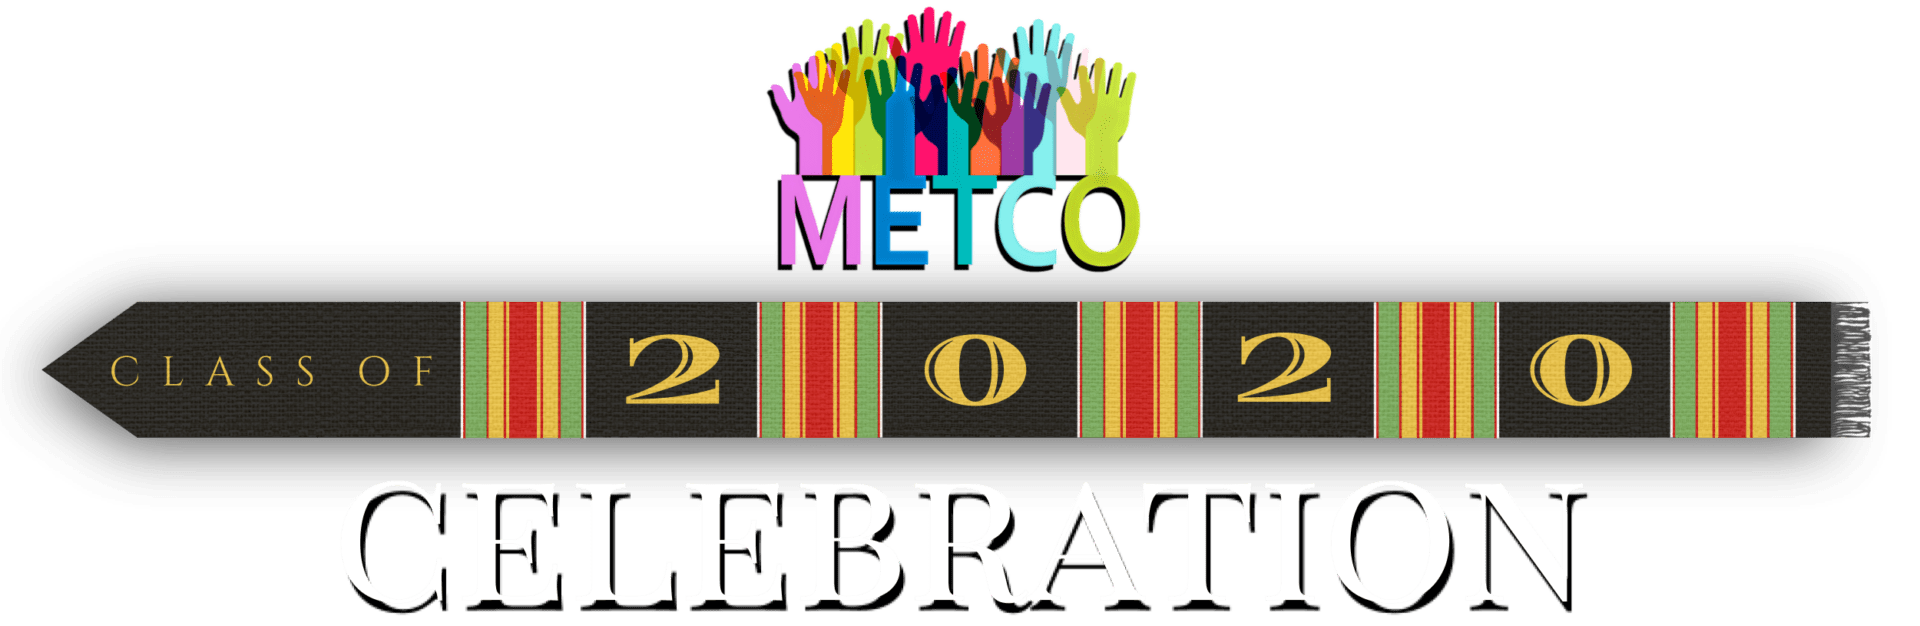 METCO Celebration title graphic